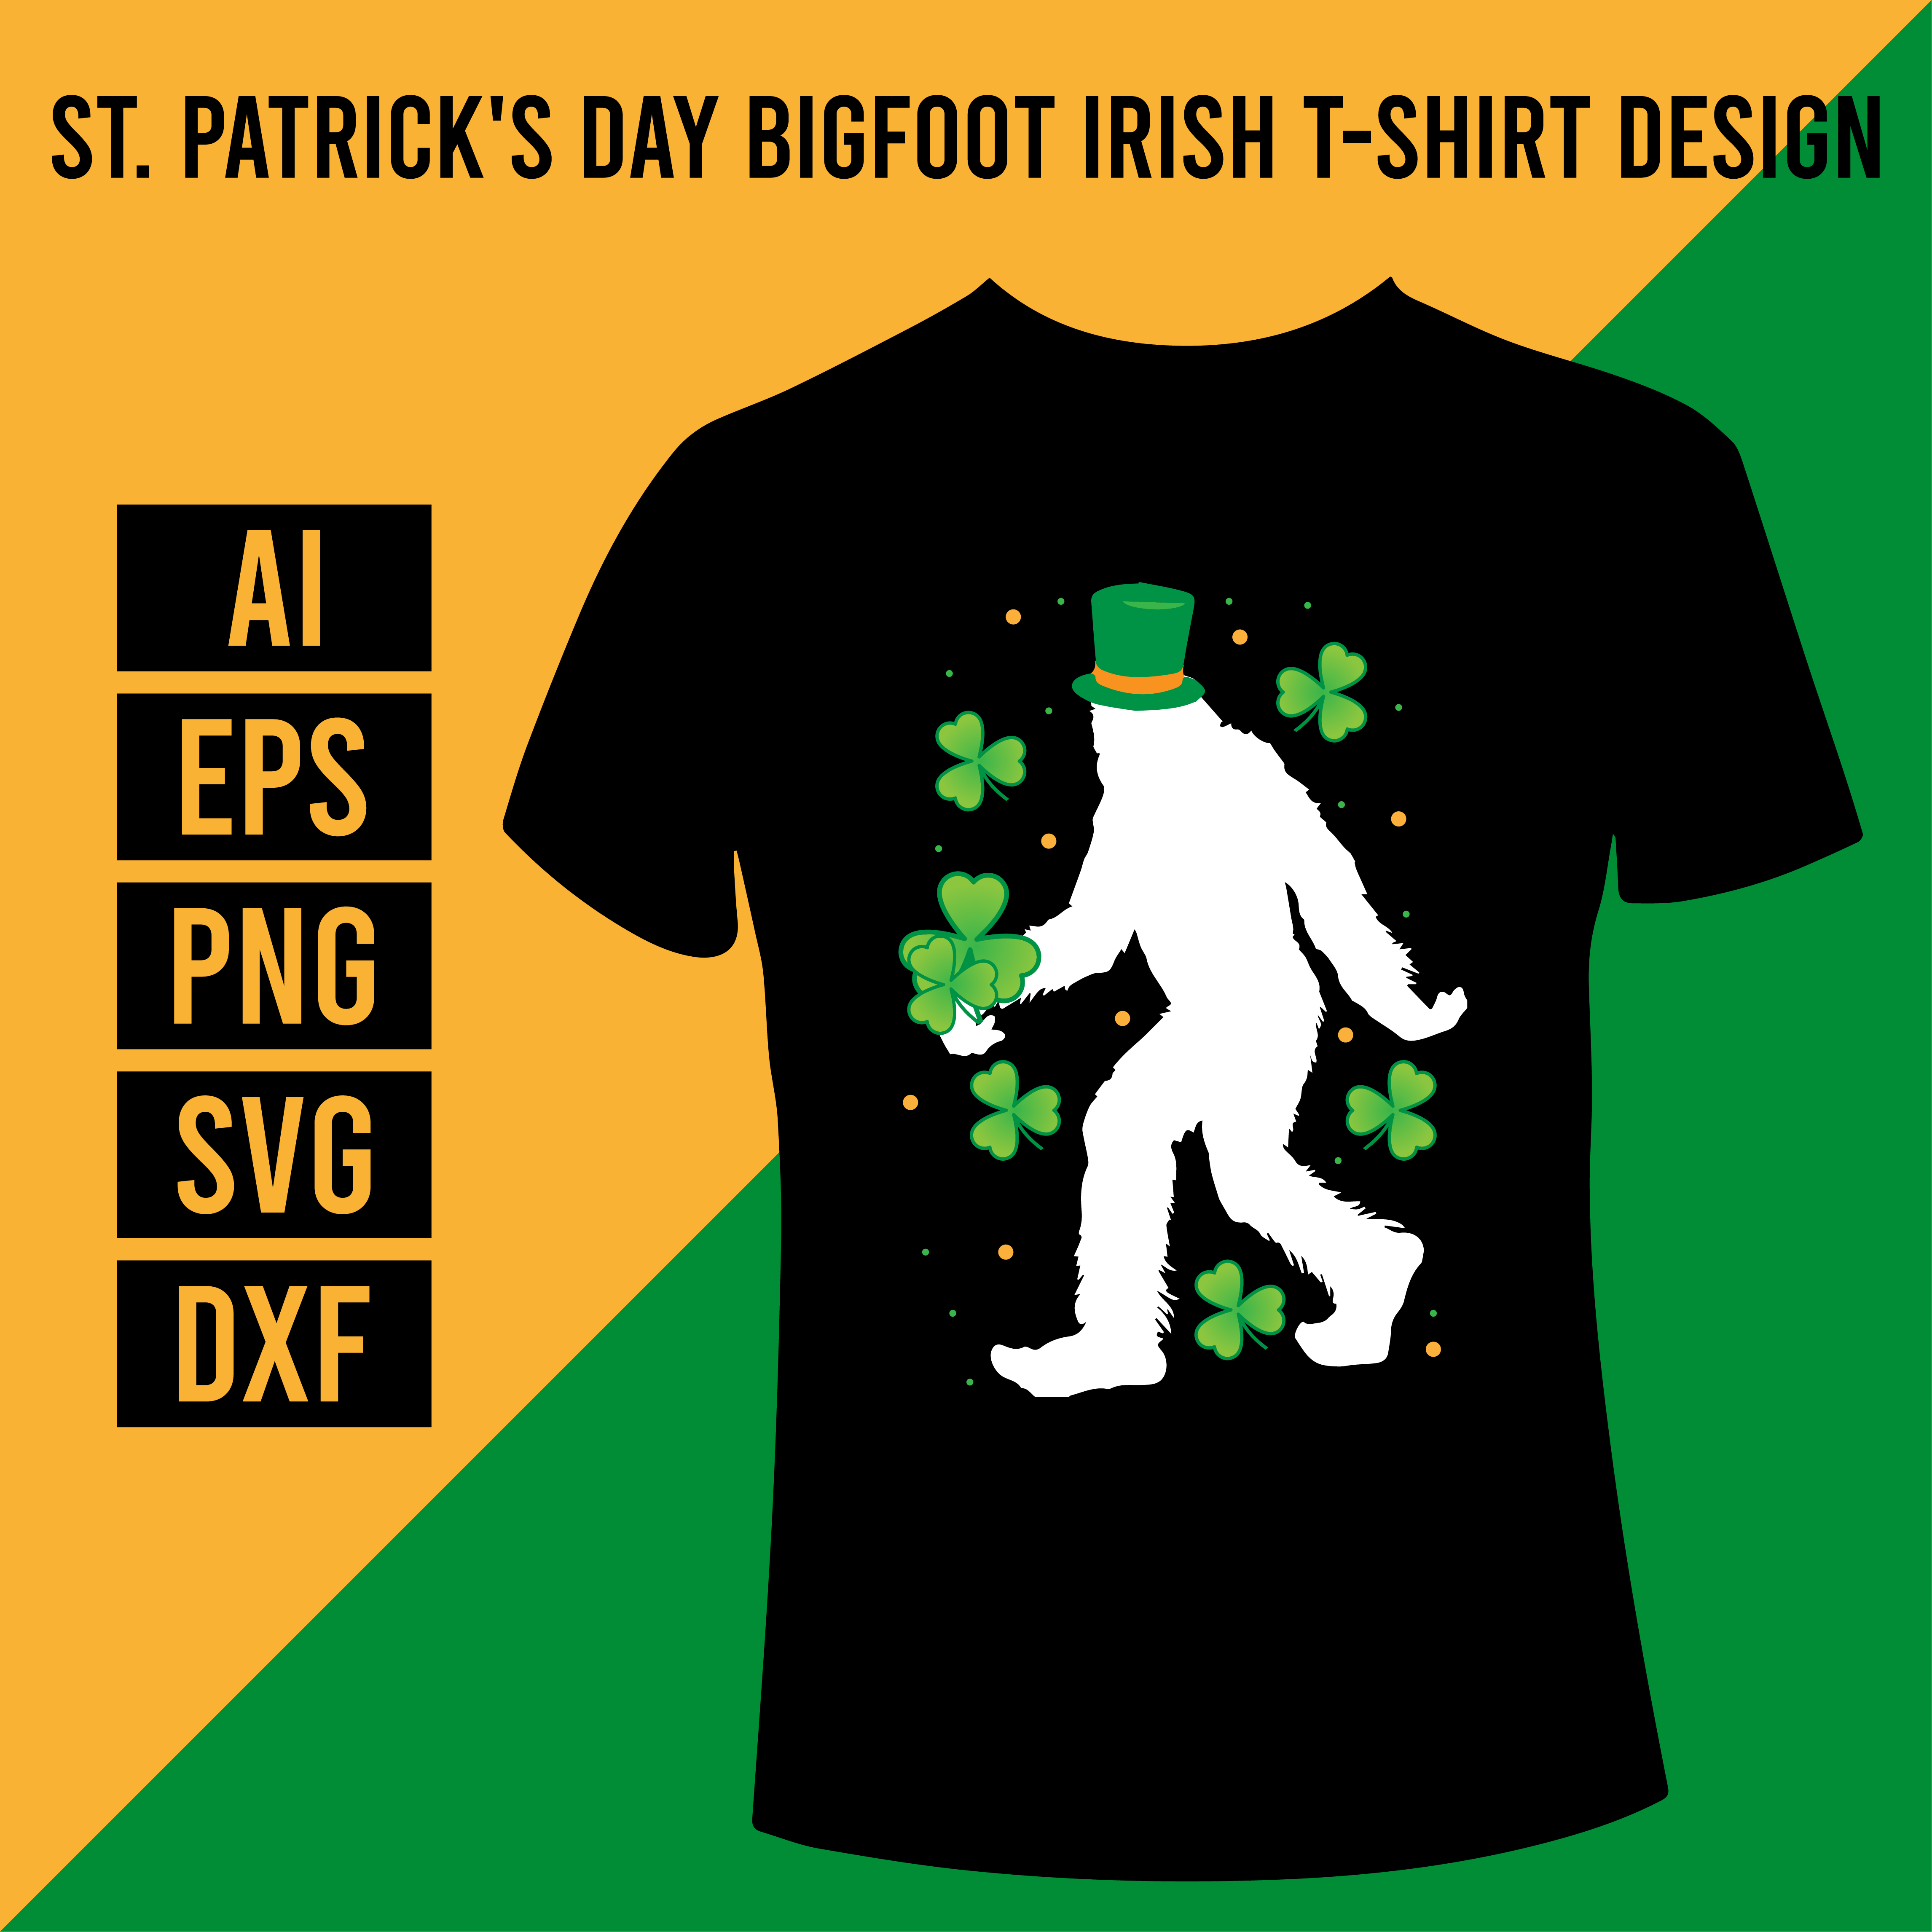 St Patrick's Day Bigfoot Irish T-Shirt Design cover image.